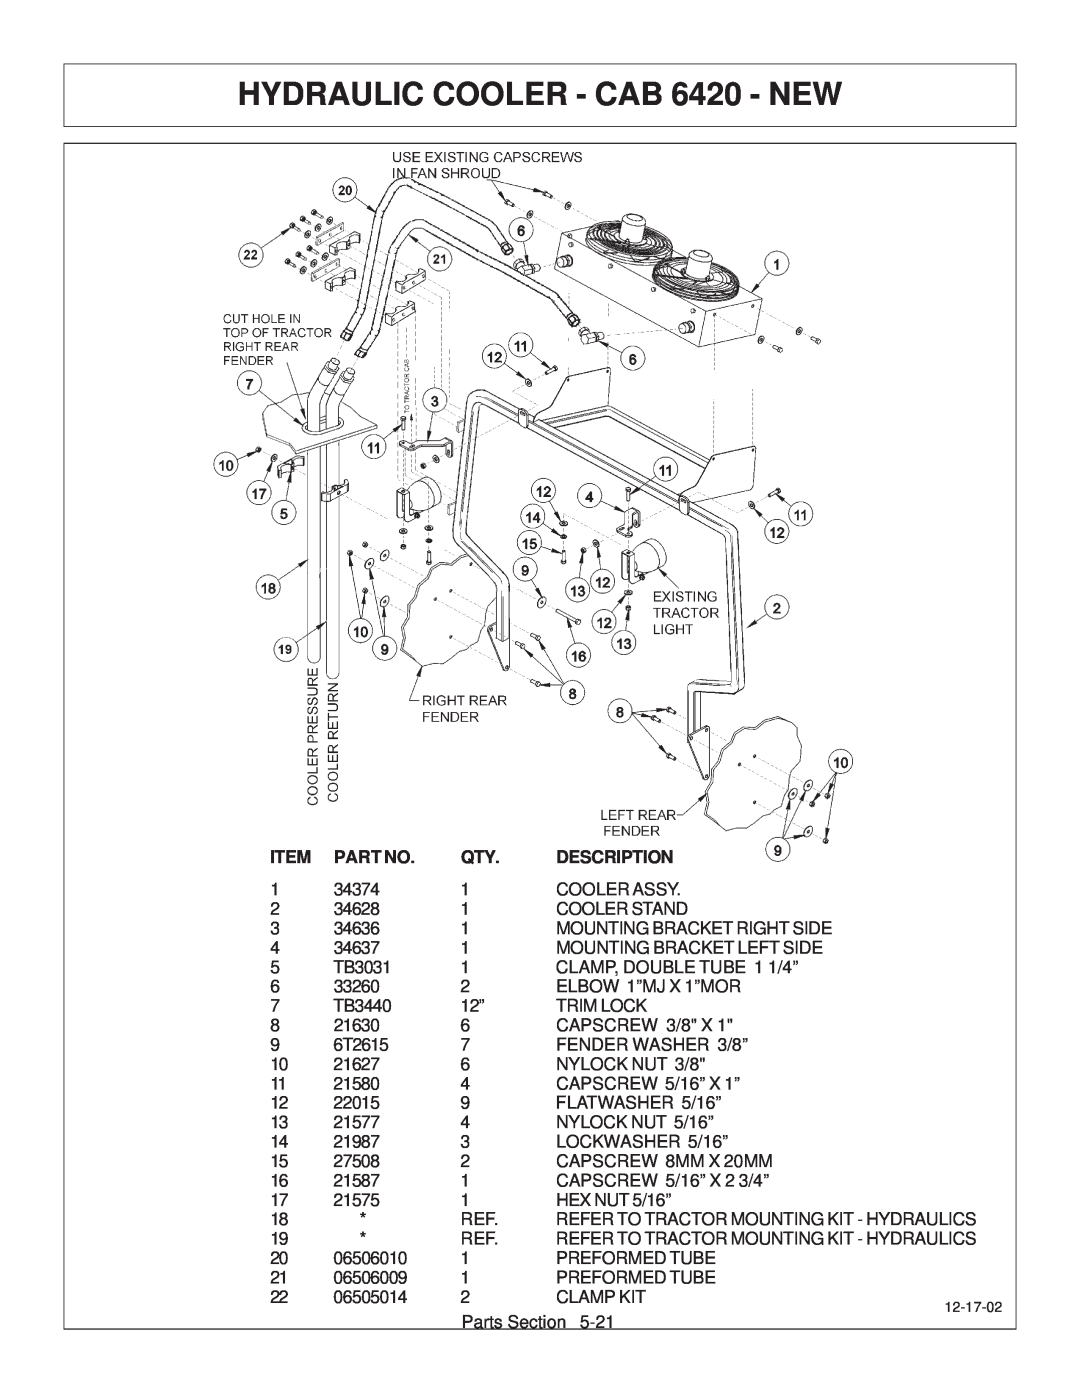 Tiger Products Co., Ltd JD 72-7520 manual HYDRAULIC COOLER - CAB 6420 - NEW, Description 